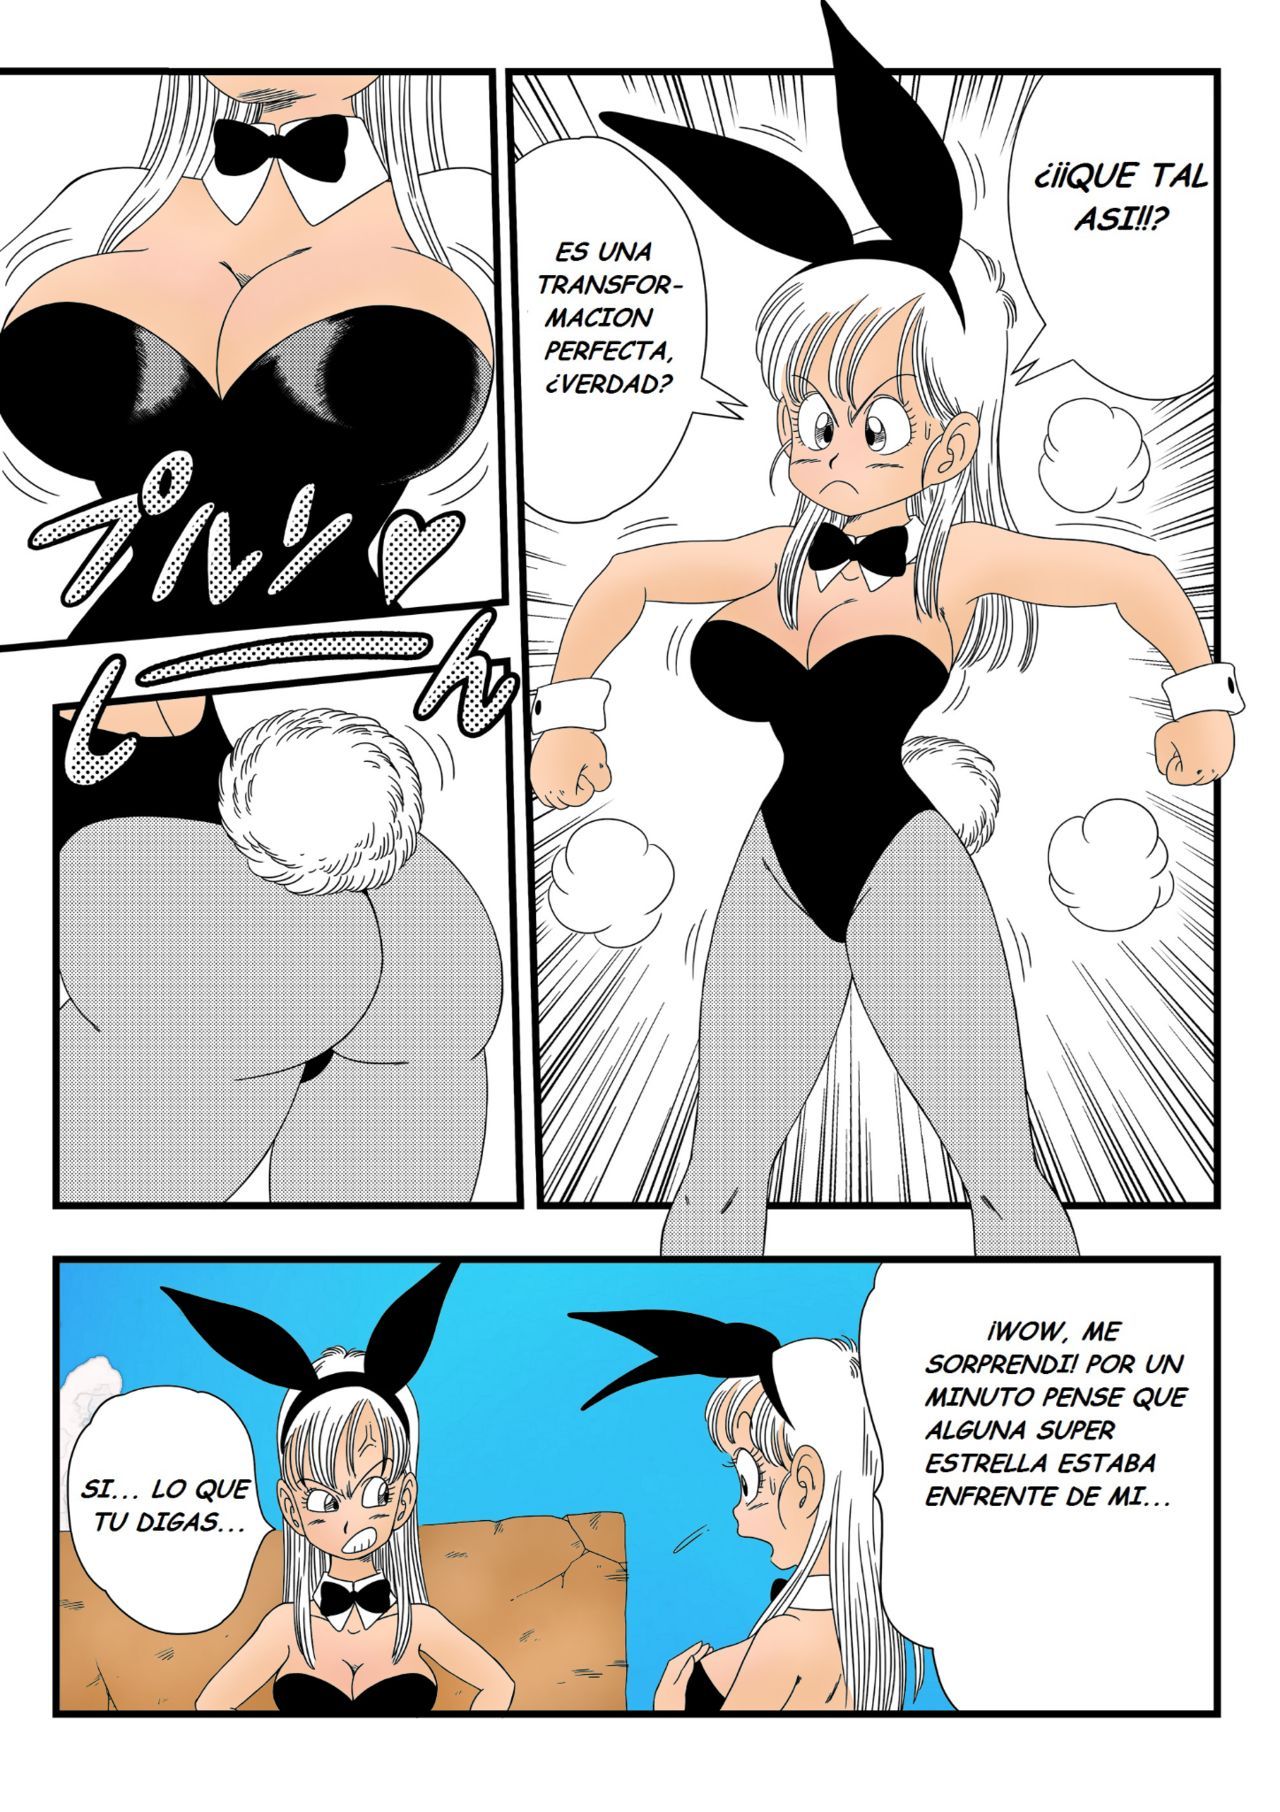 Bunny Girl Transformation - 4